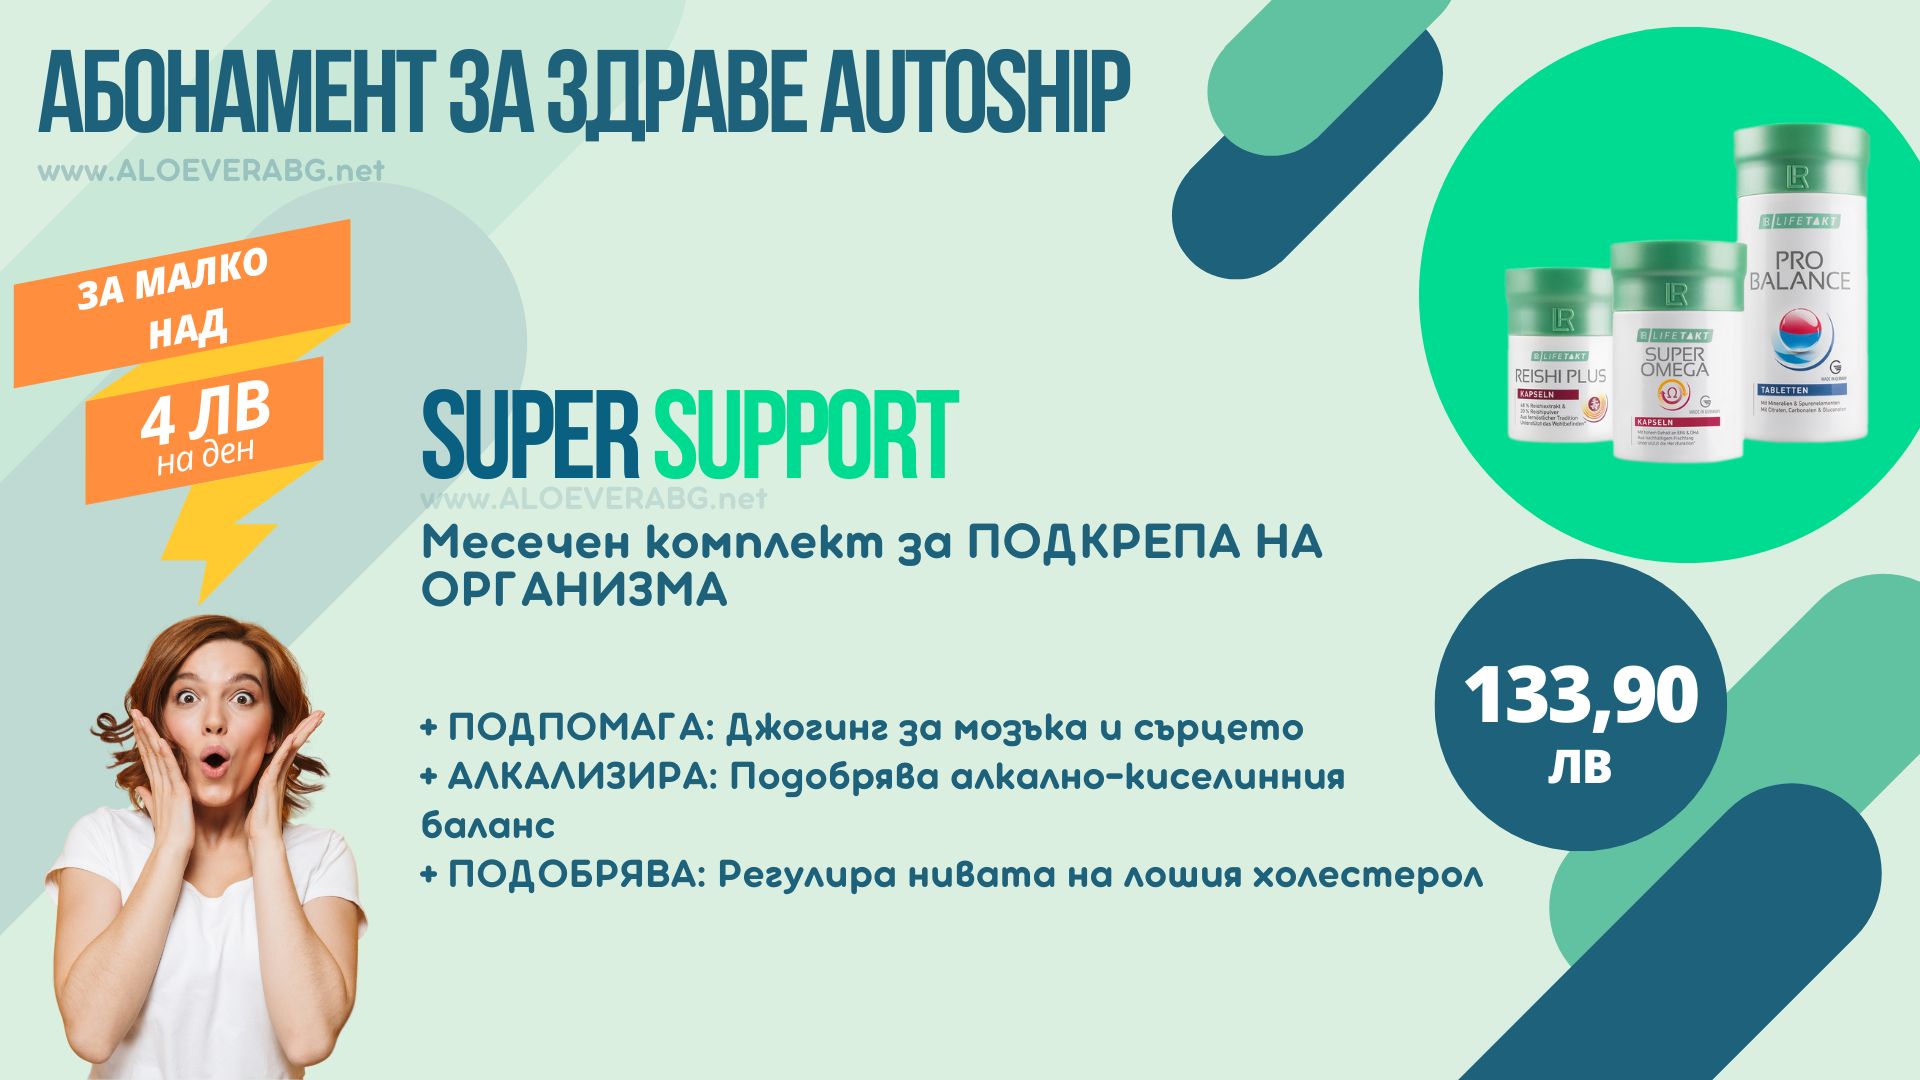 Autoship SUPER SUPPORT